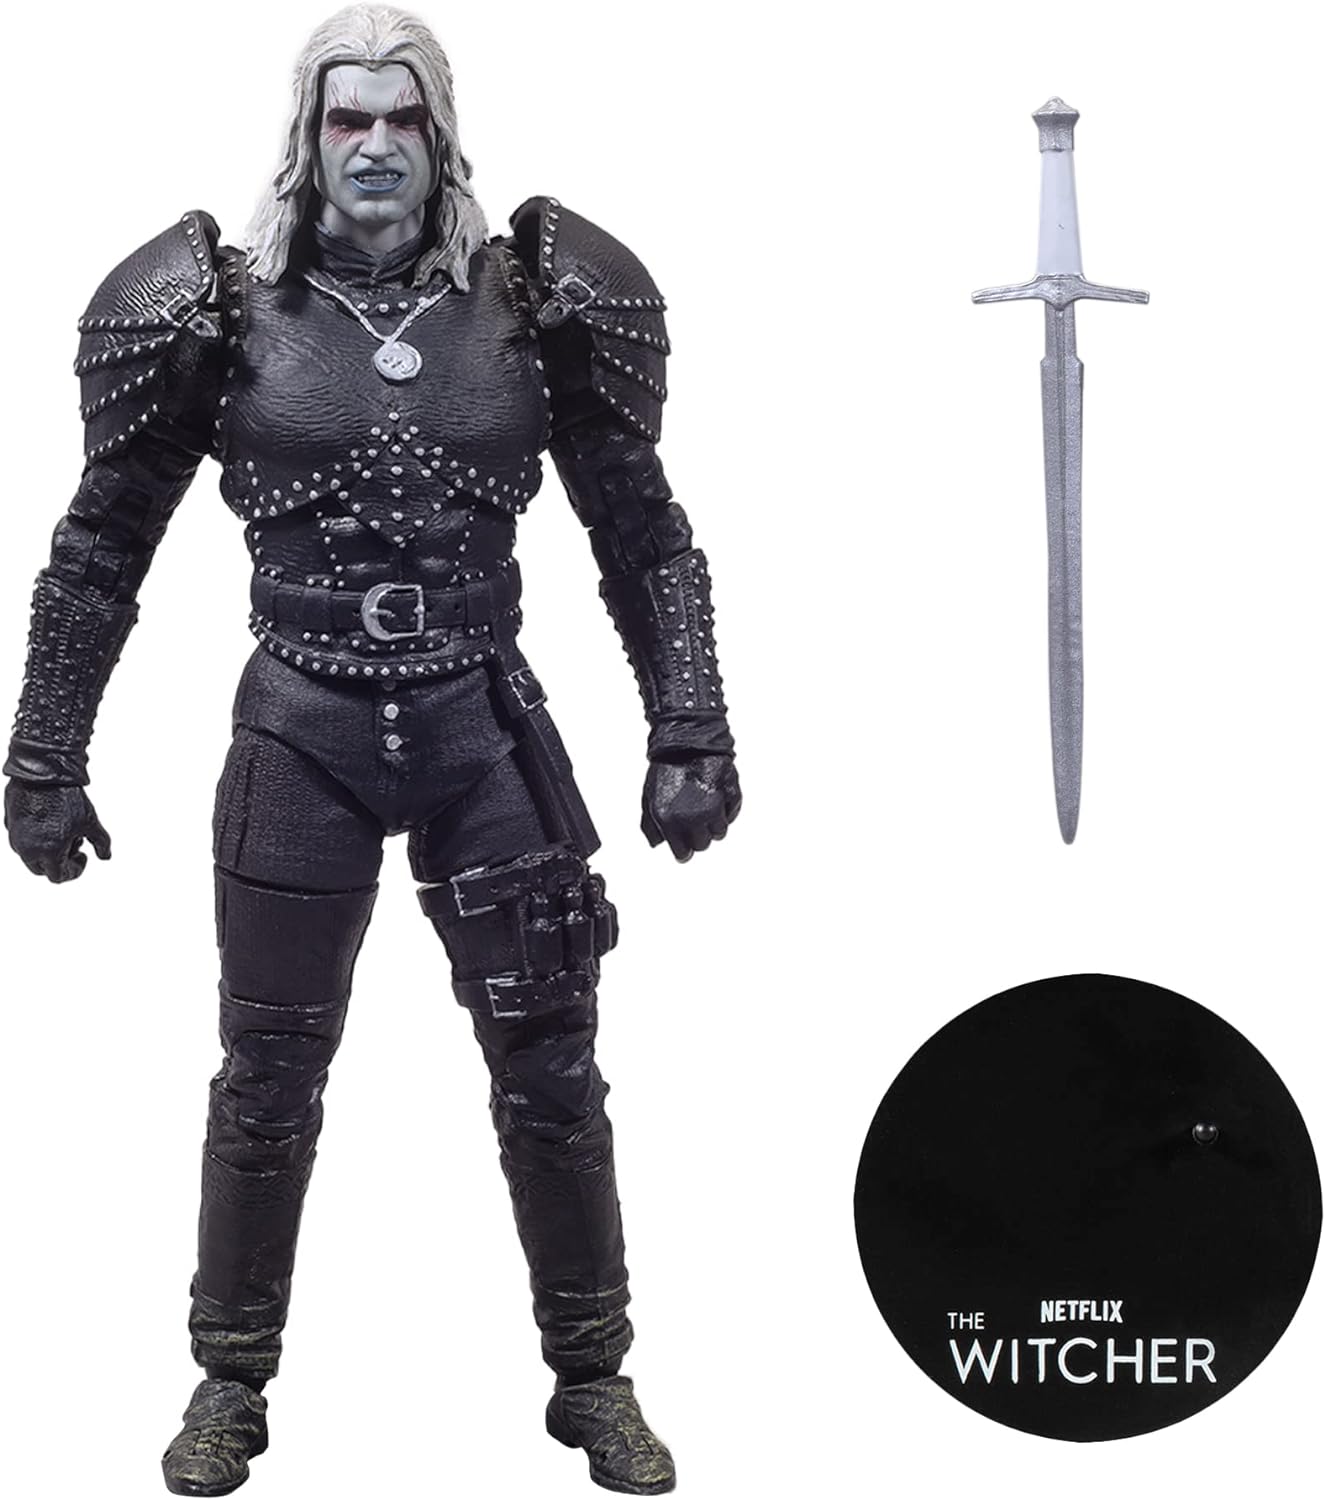 Witcher Netflix Wave 2 7 Inch S2 Geralt Witcher Mode Action Figure Case